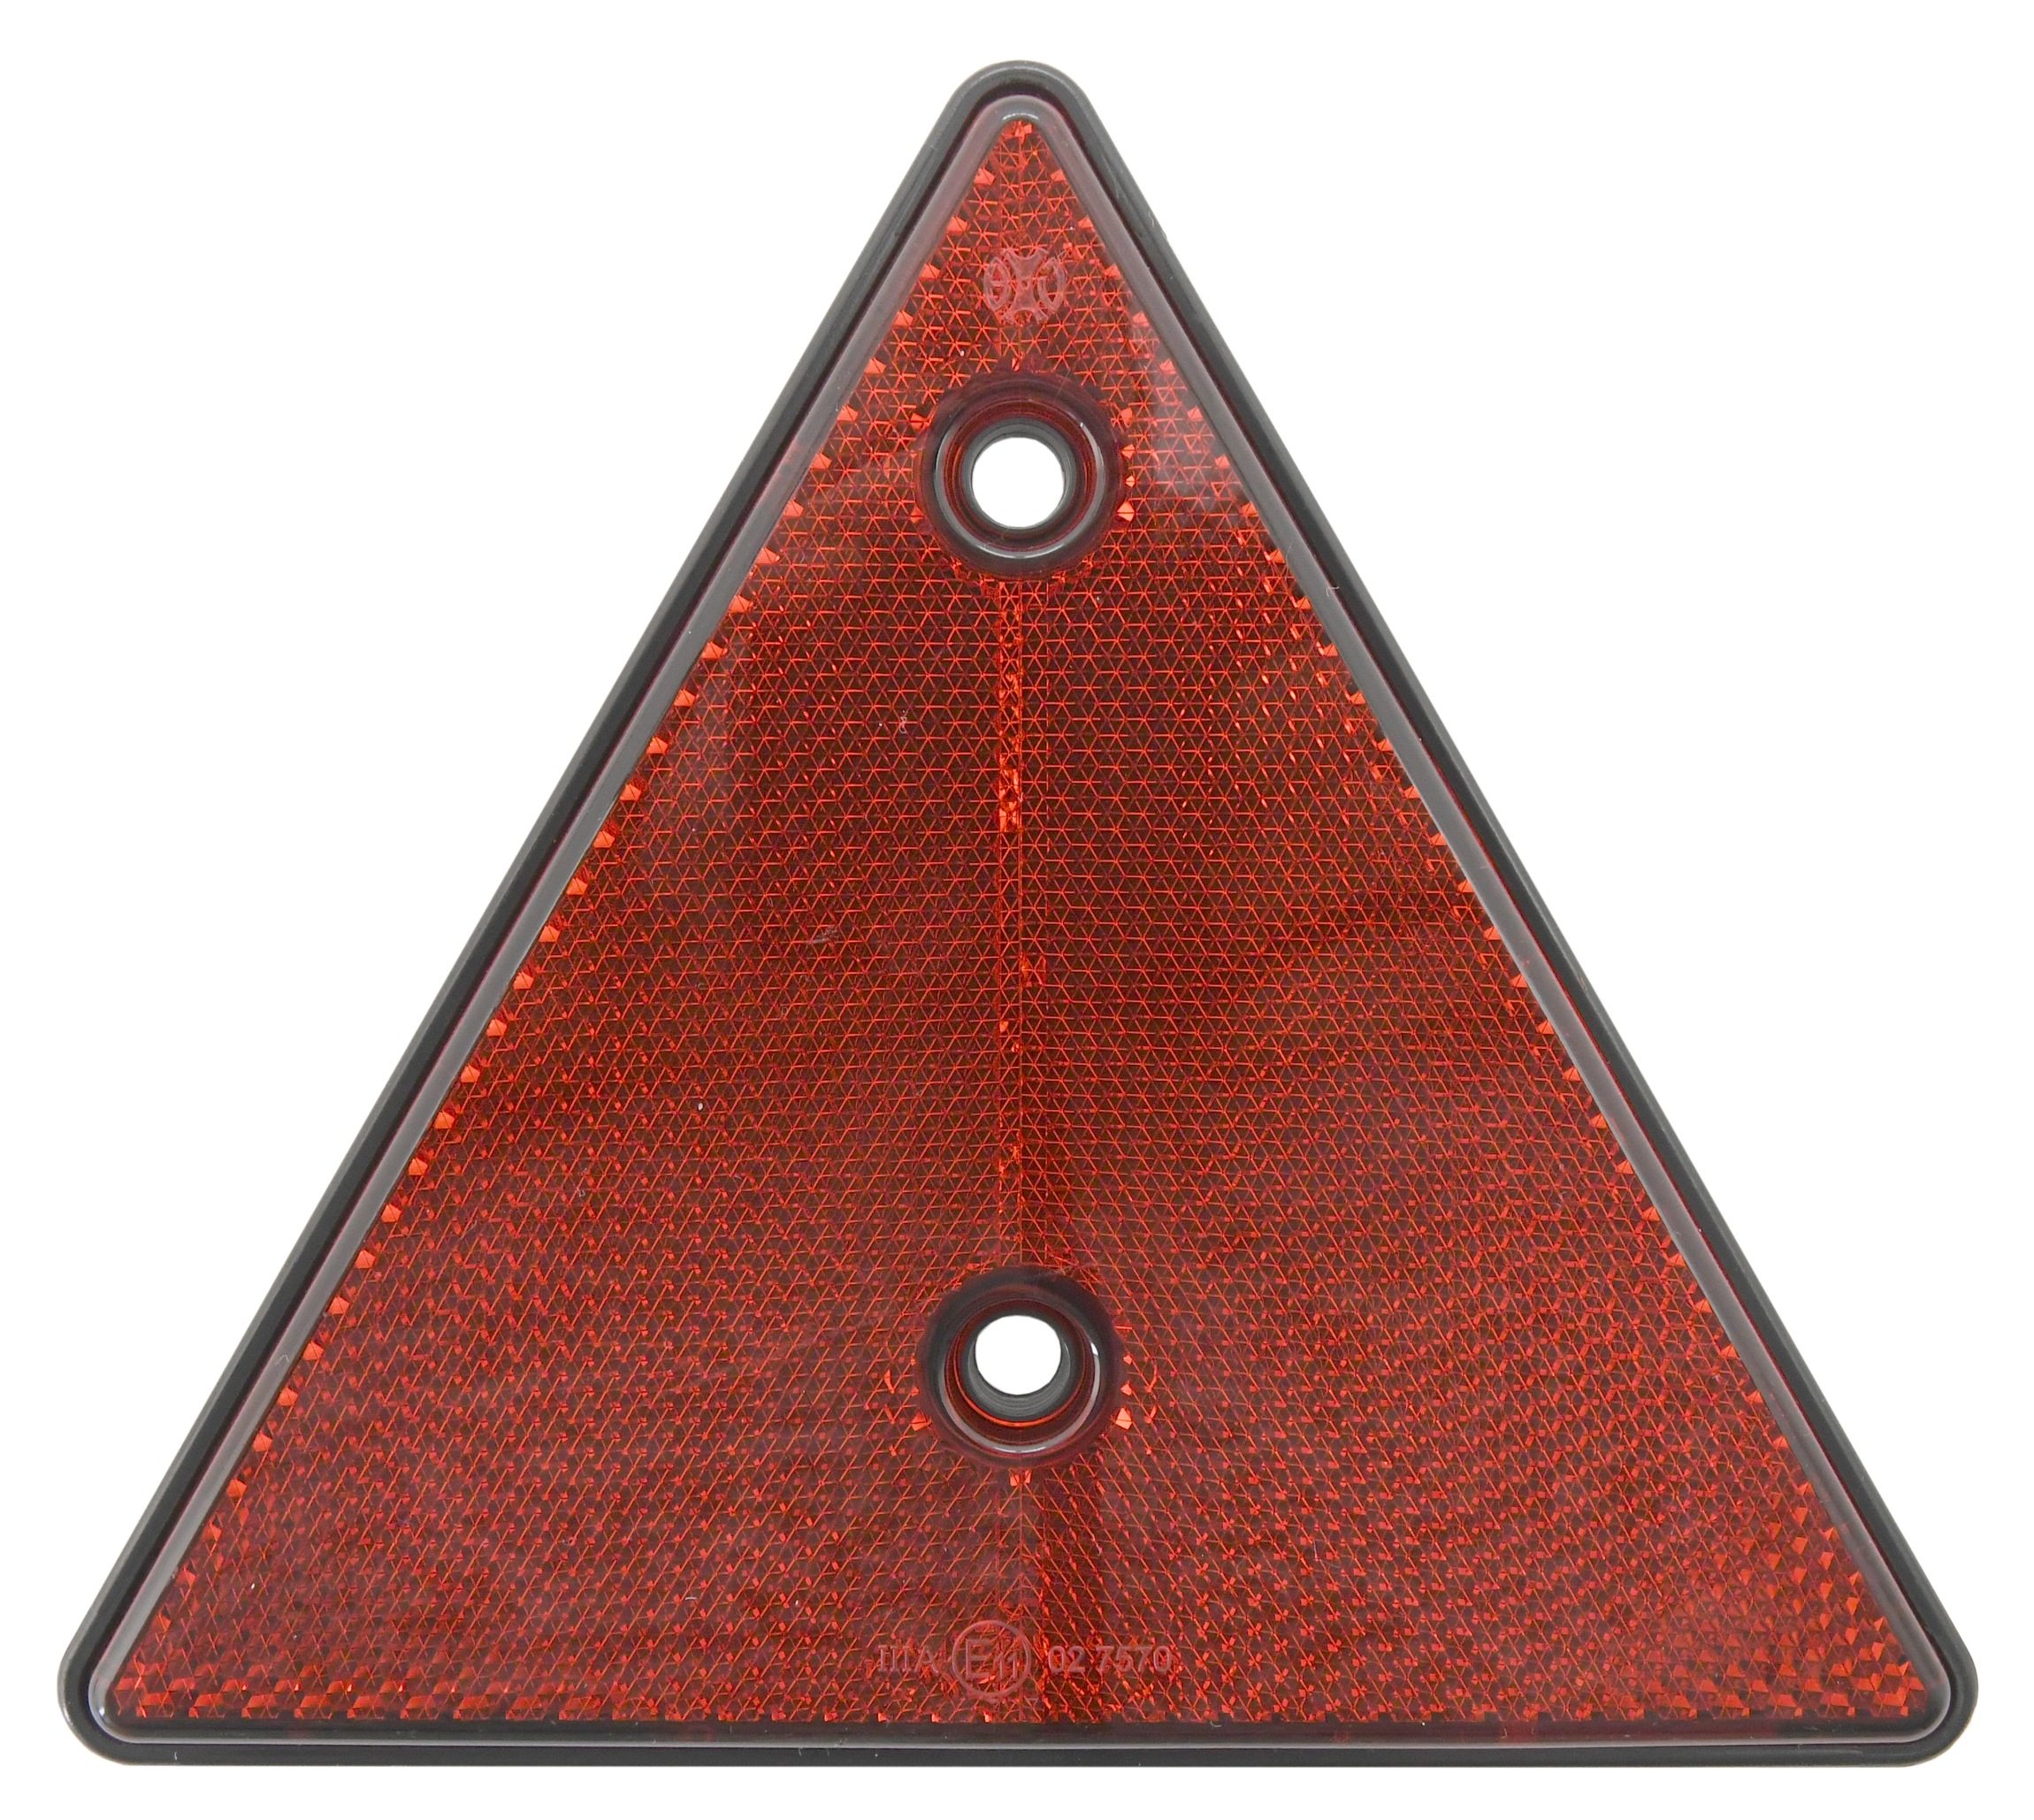 Odrazka trojúhelník 15cm E homologace 1ks